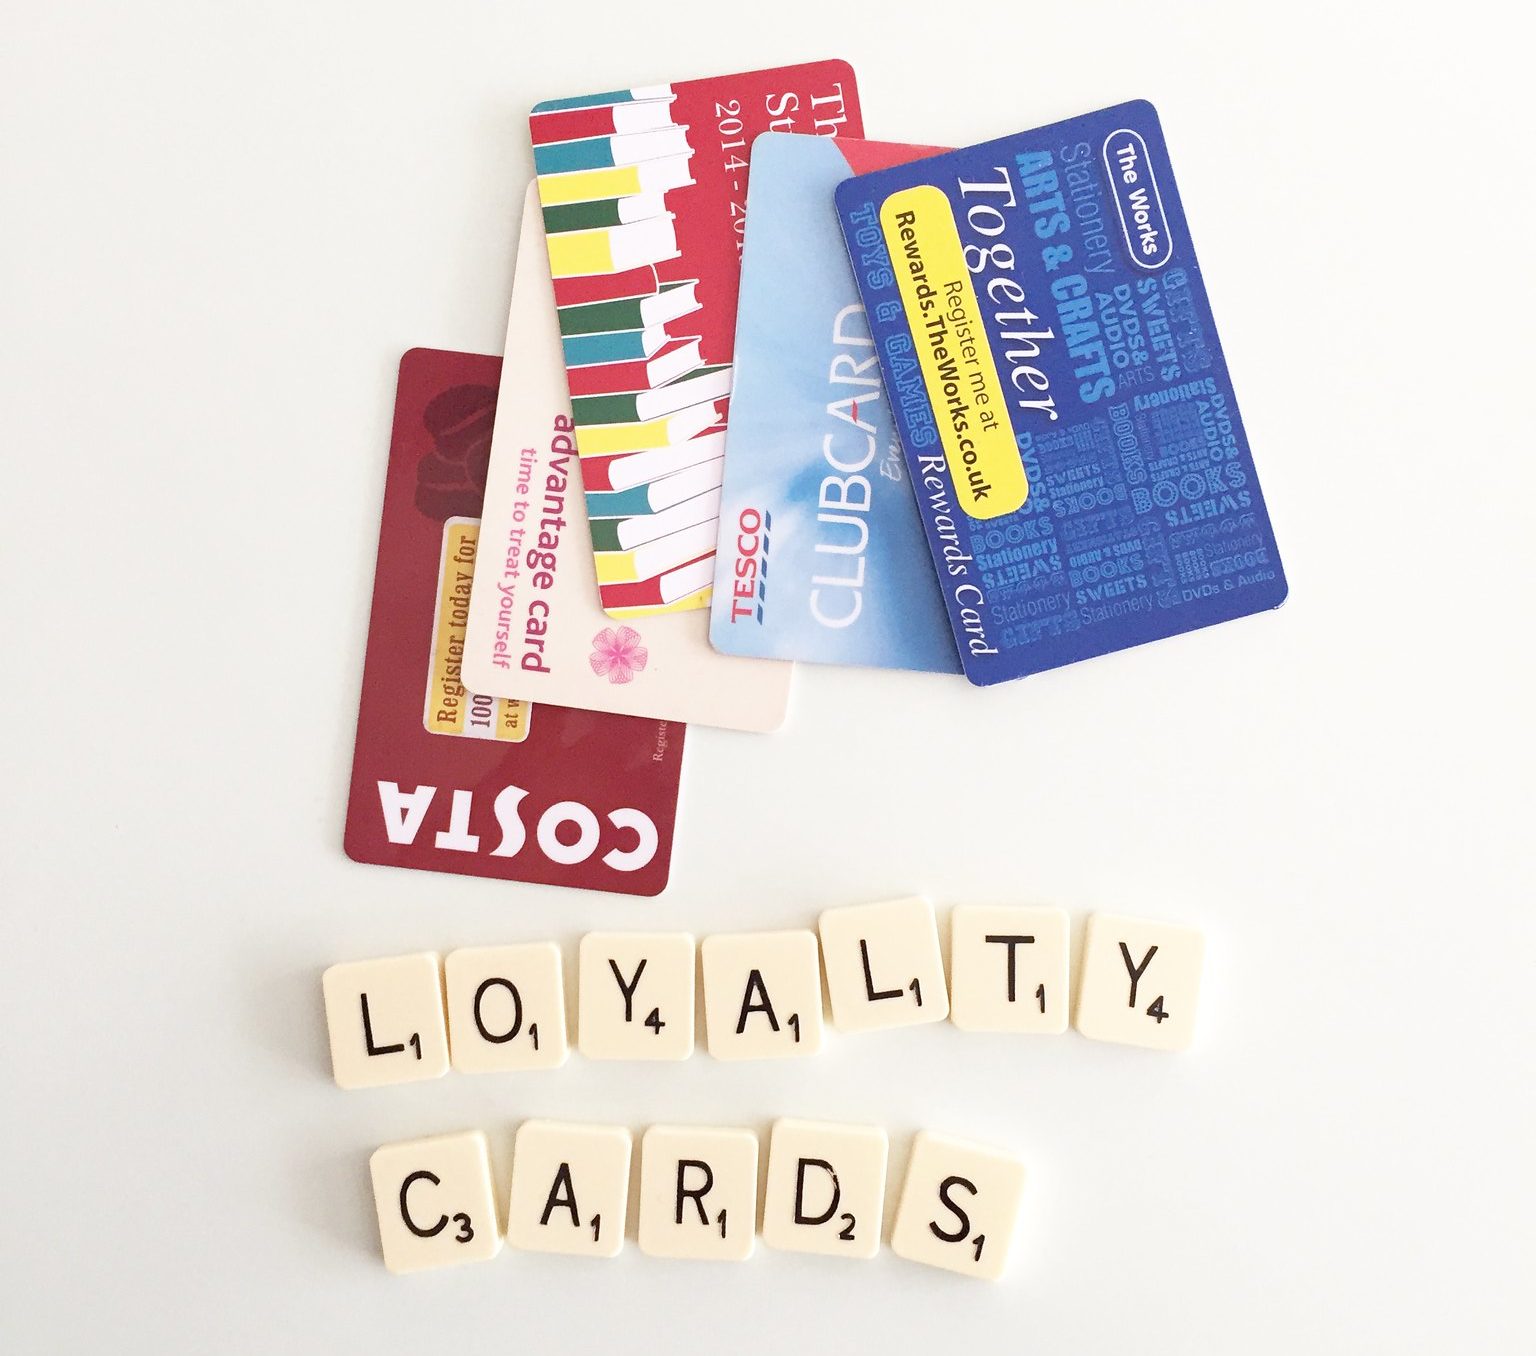 Several customer loyalty cards.